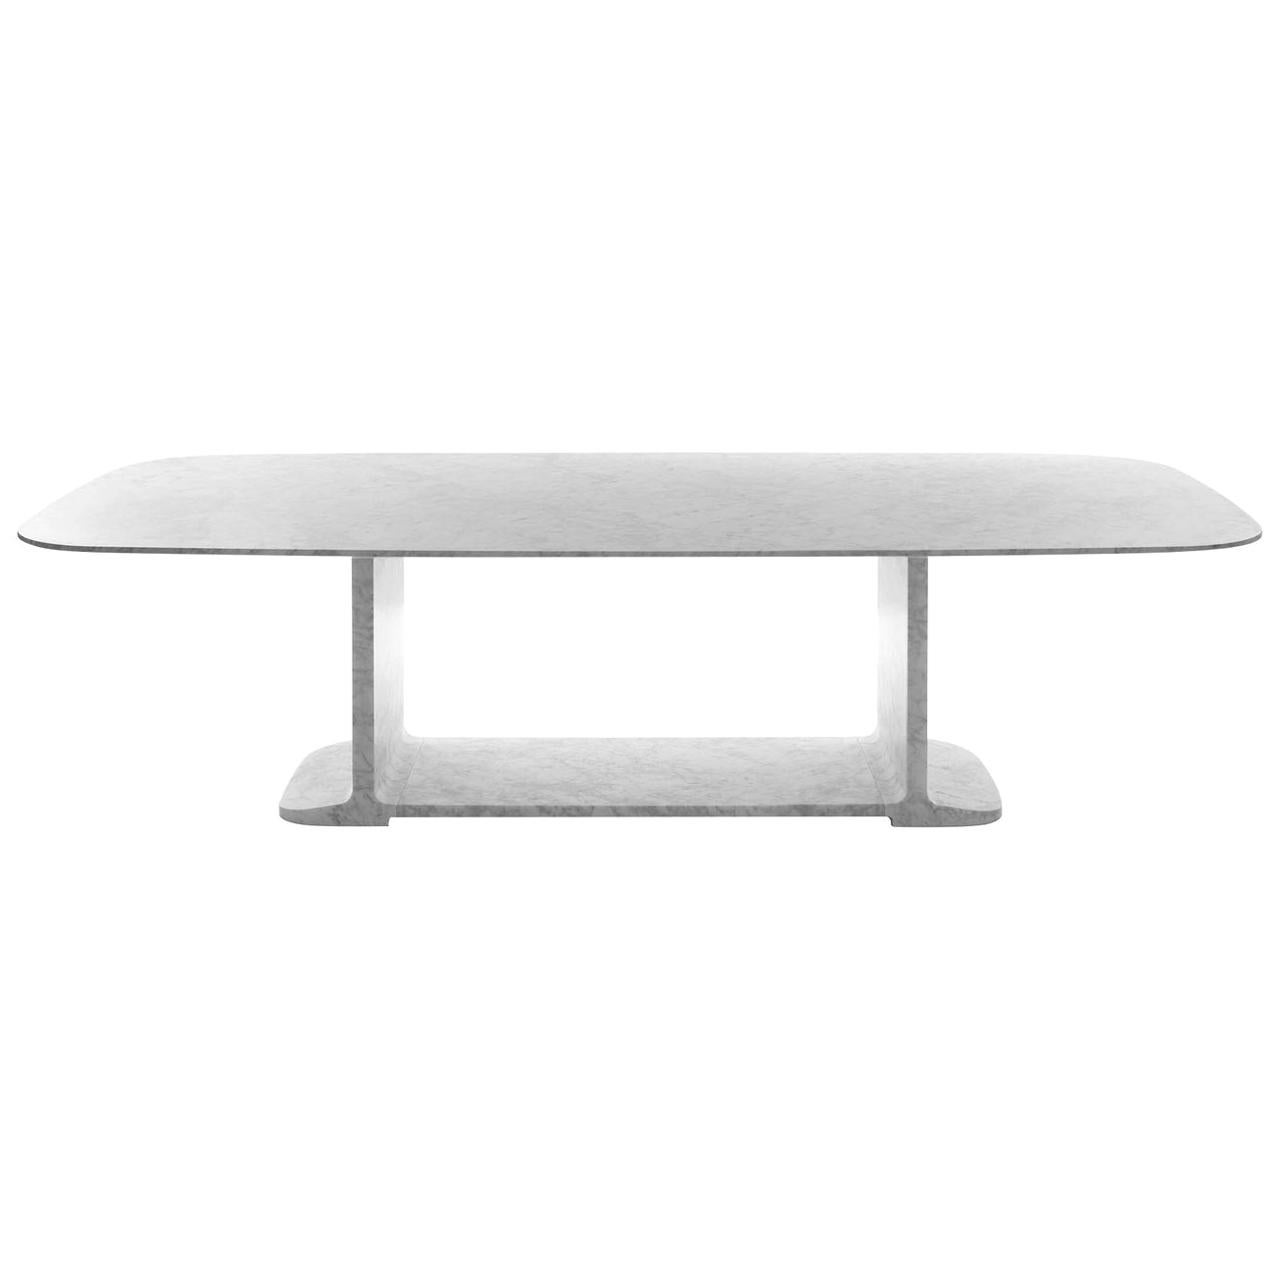 Toni Dining Table, Design James Irvine, 2010